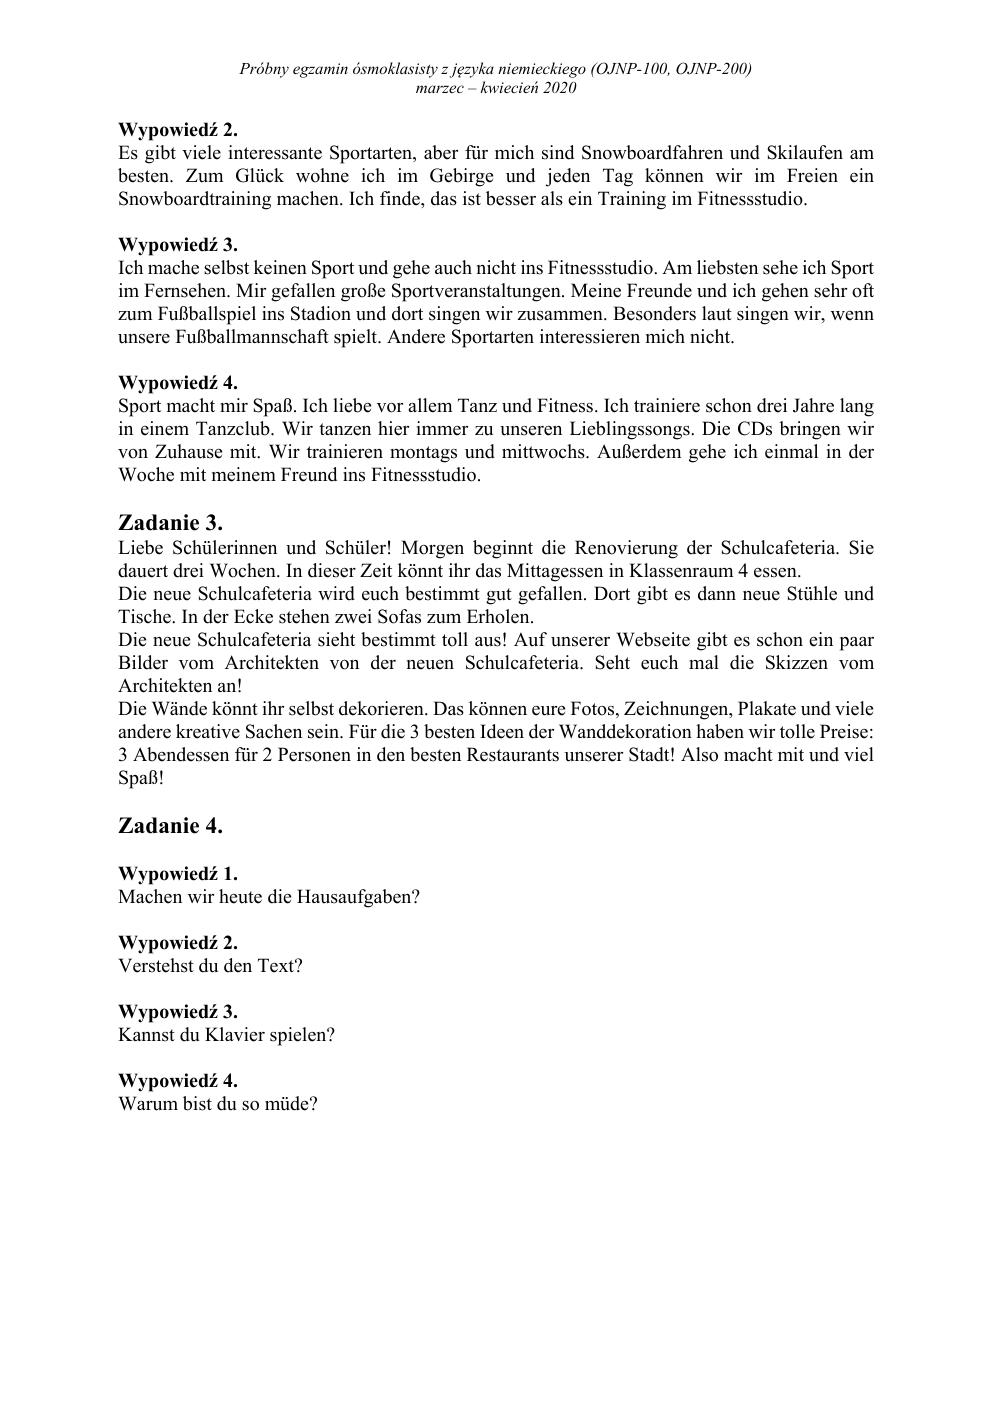 transkrypcja - niemiecki - egzamin ósmoklasisty 2020 próbny-2